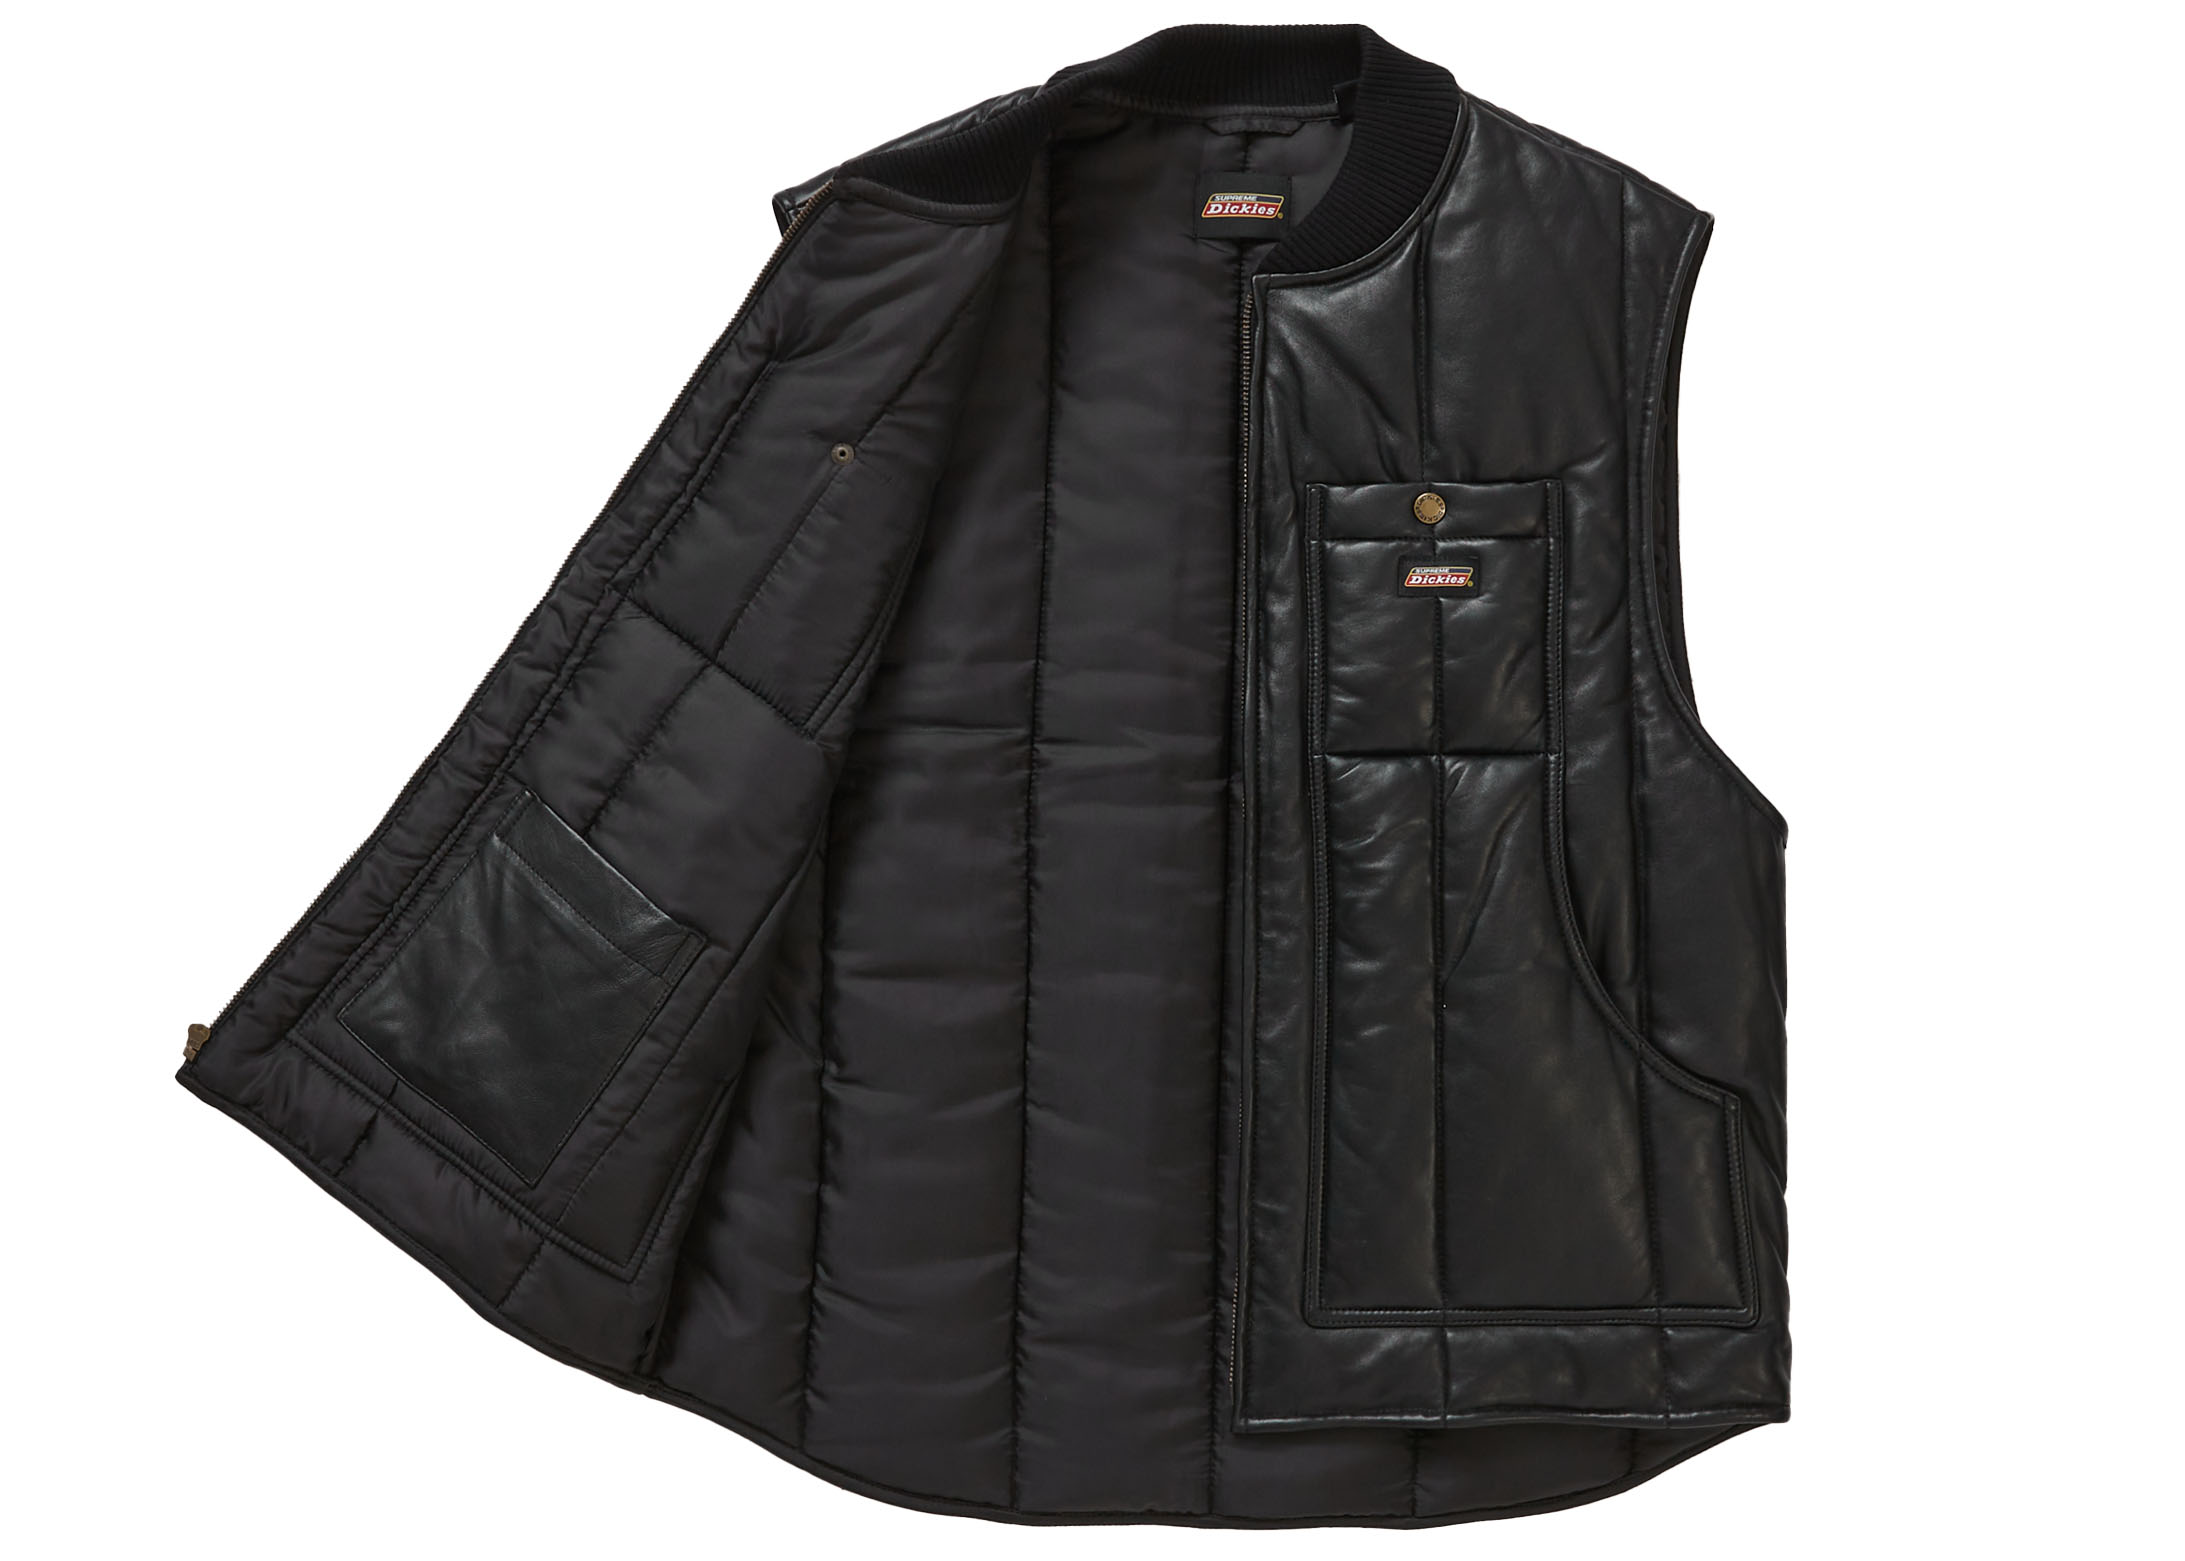 Supreme Dickies Leather Work Vest Black